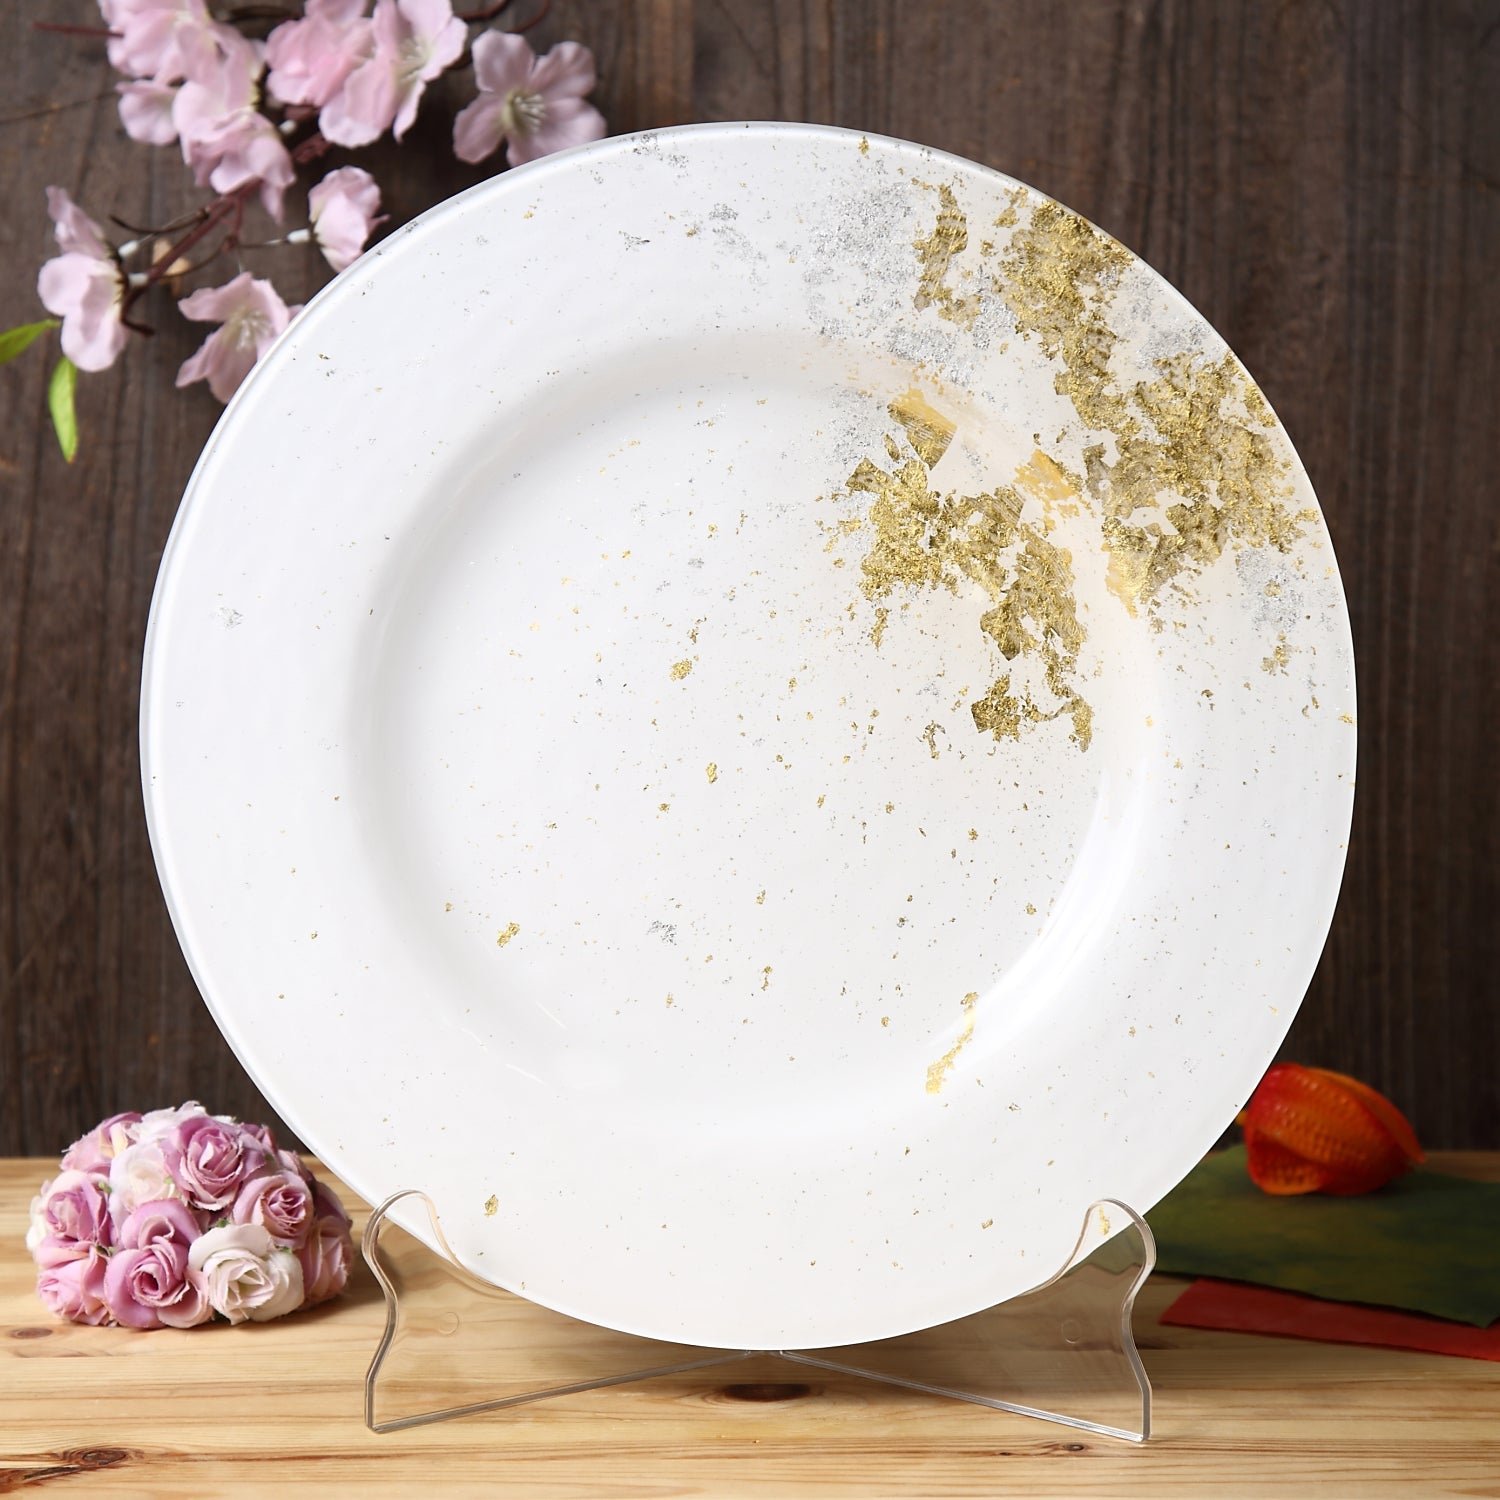 Syosaku Japanese Urushi Glass Dinner Plate 12.5-inch (32cm) Pure White with Gold Leaf, Dishwasher Safe - Syosaku-Japan